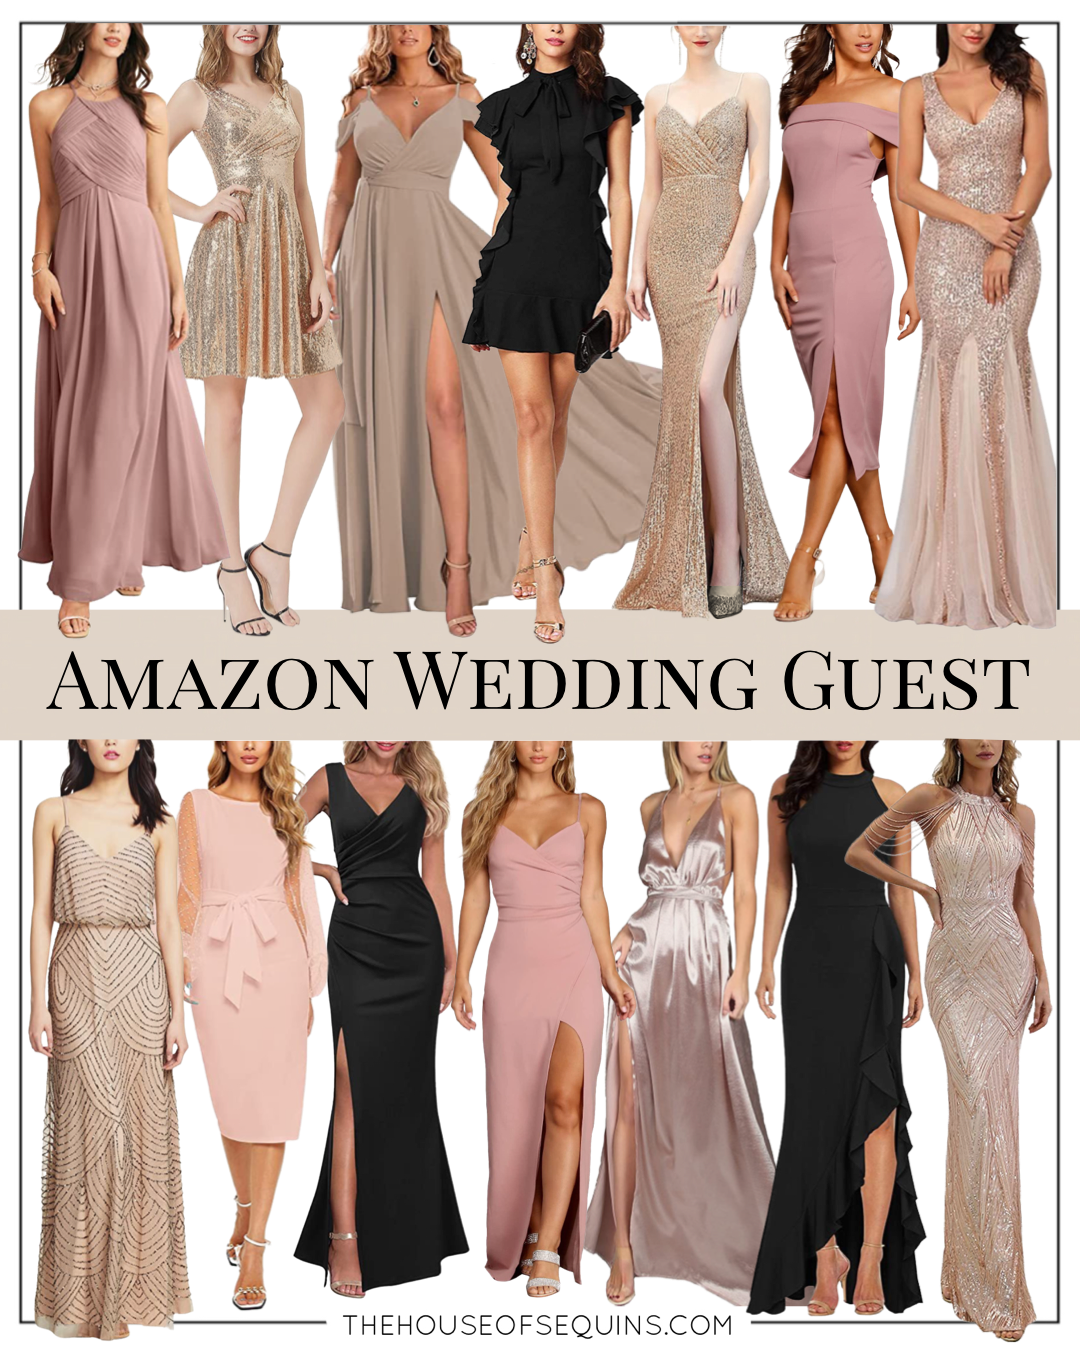 Blogger Sarah Lindner of The House of Sequins sharing wedding guest dresses.